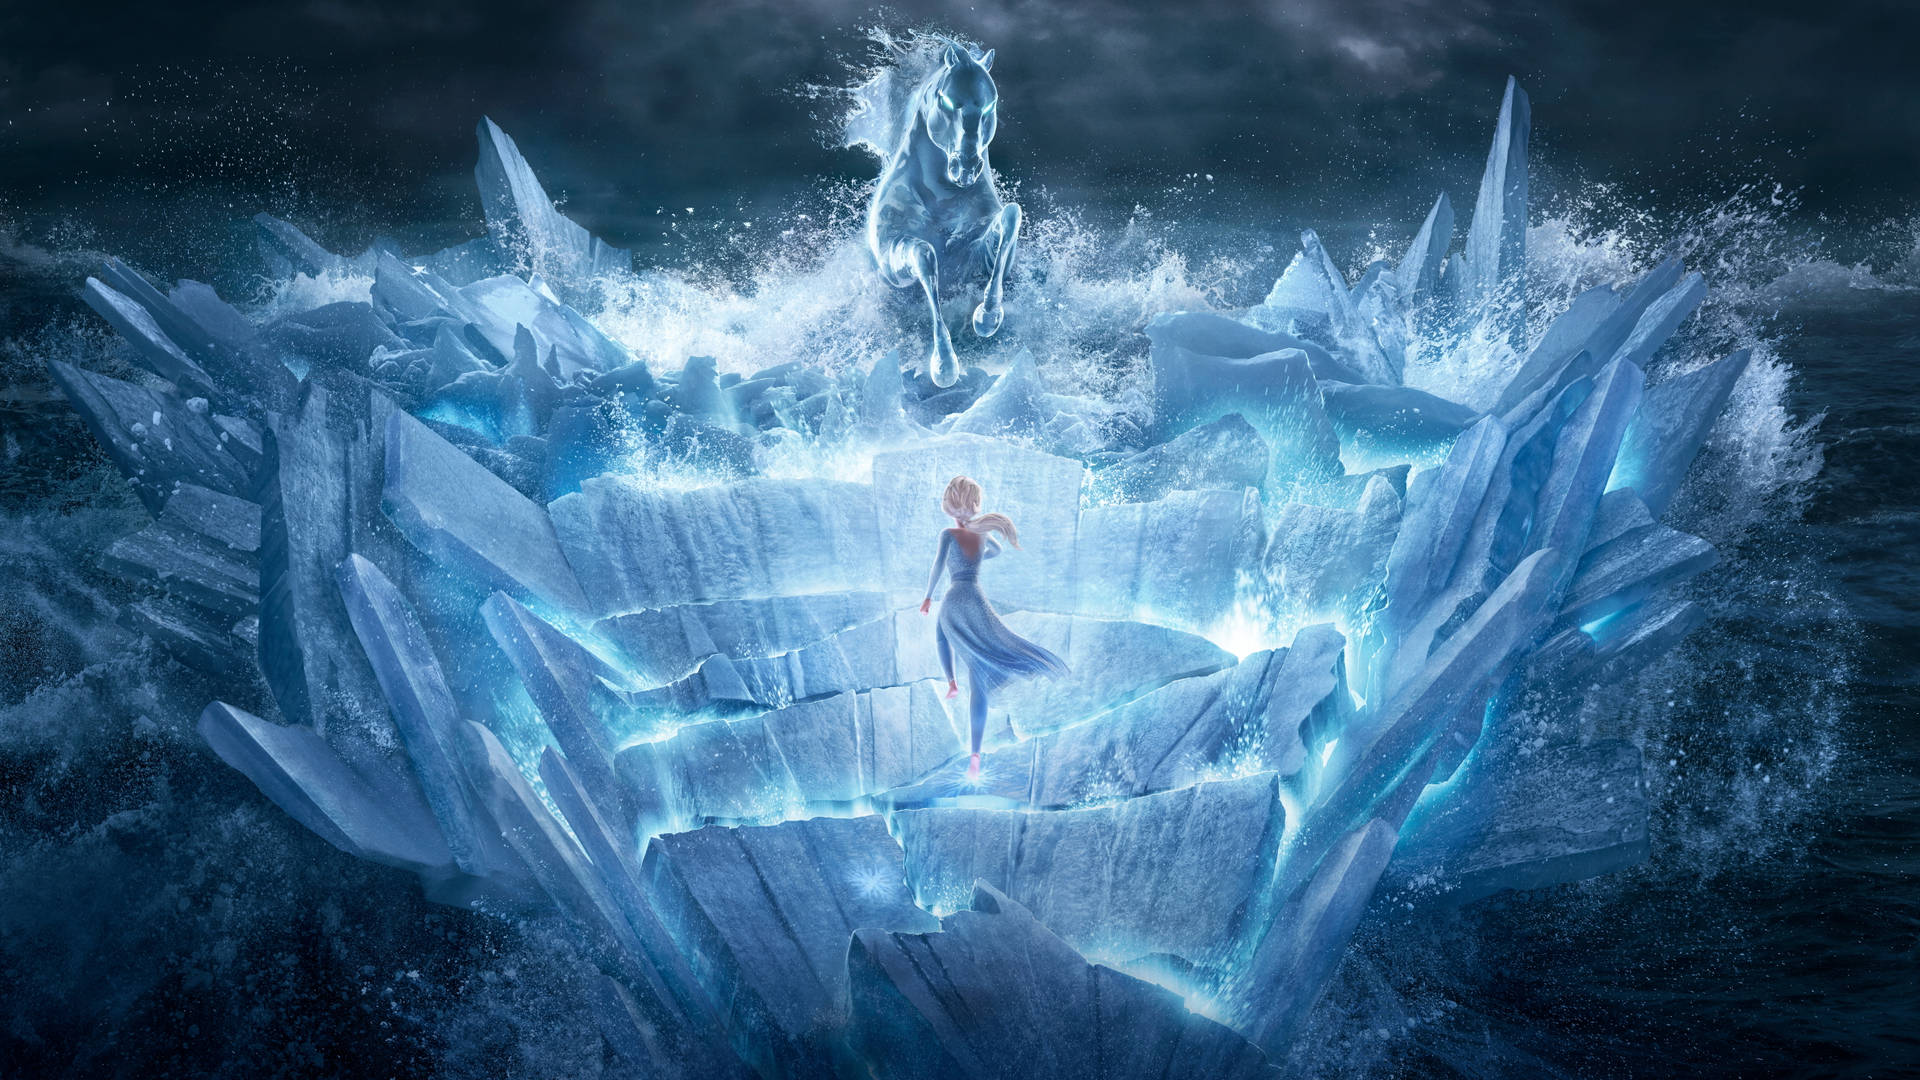 Top 999+ Frozen Elsa Wallpaper Full HD, 4K Free to Use